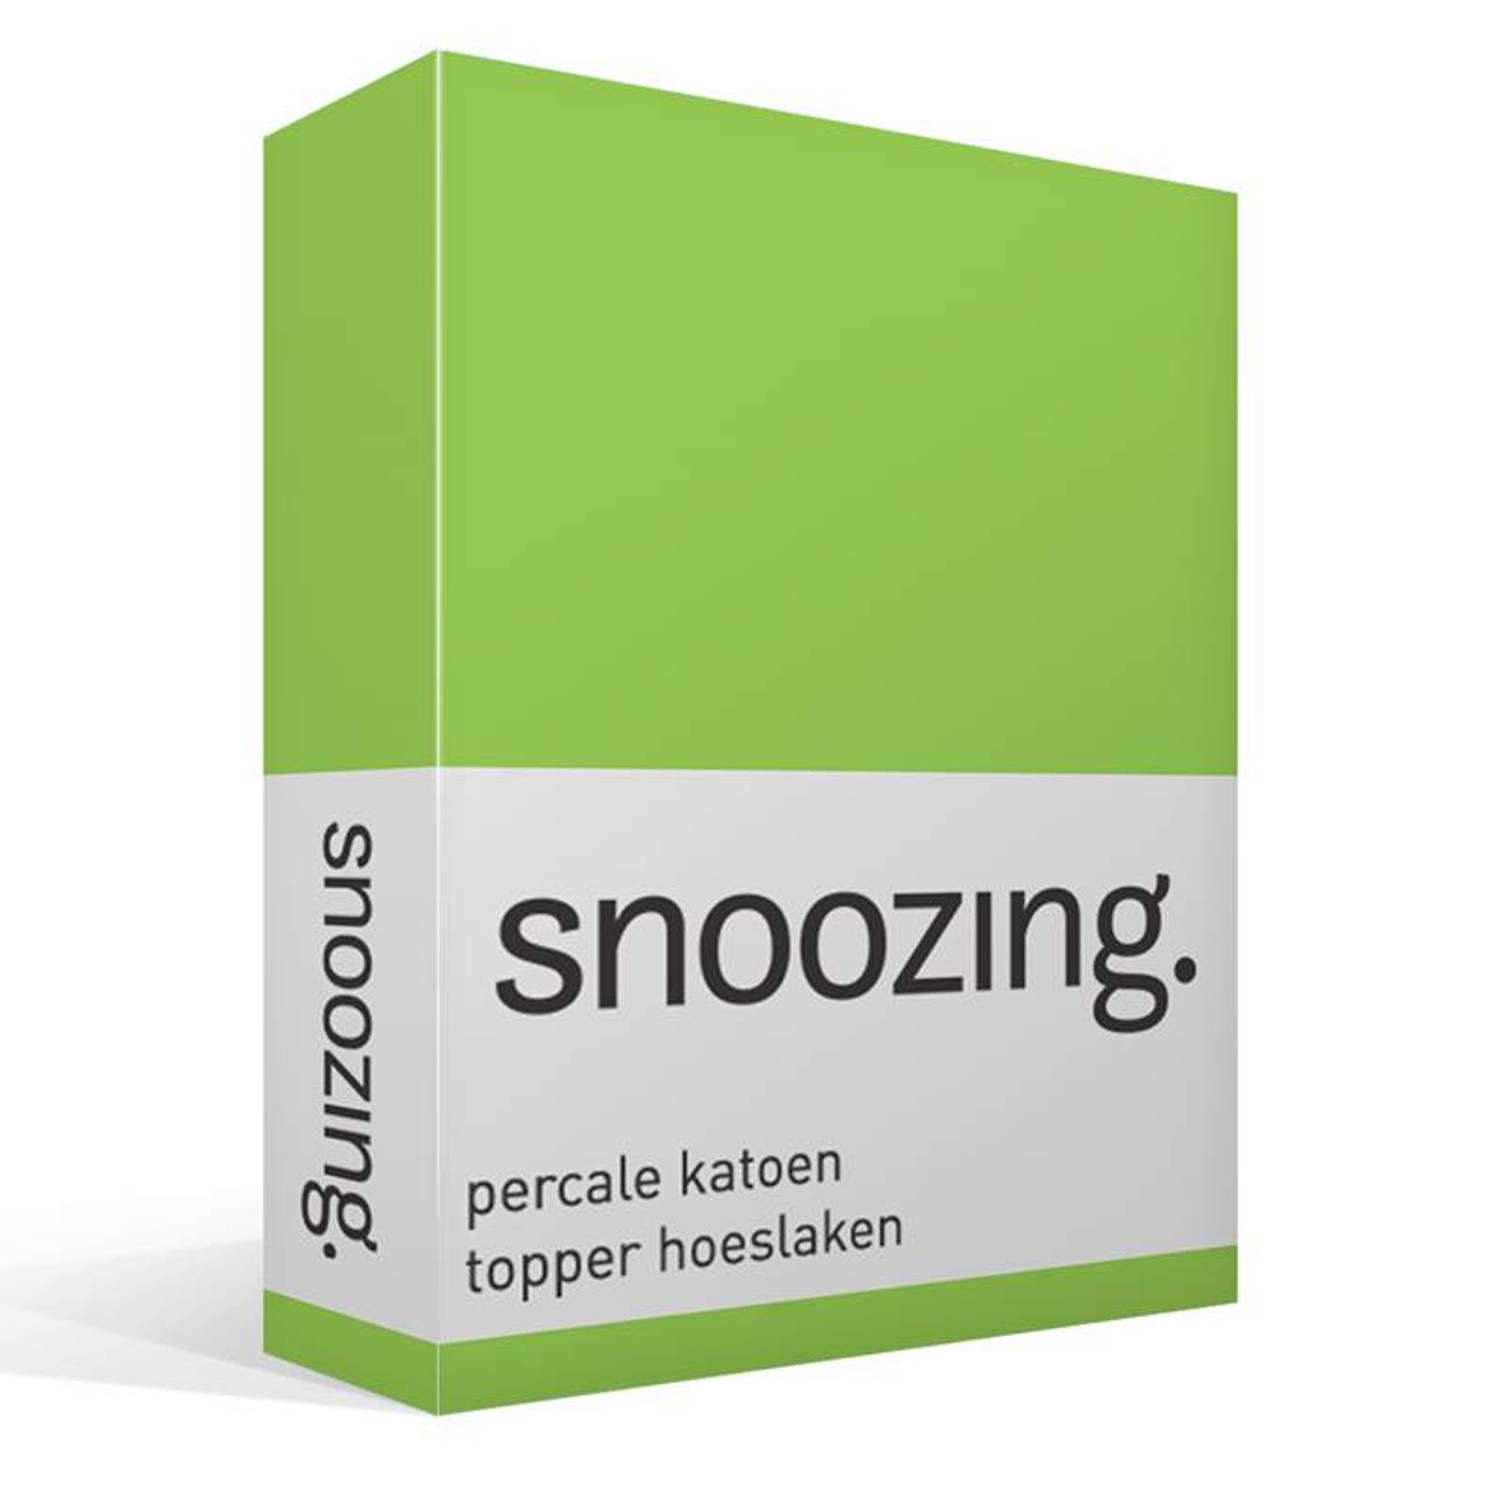 Snoozing percale katoen topper hoeslaken - 100% percale katoen - Lits-jumeaux (200x200 cm) - Groen